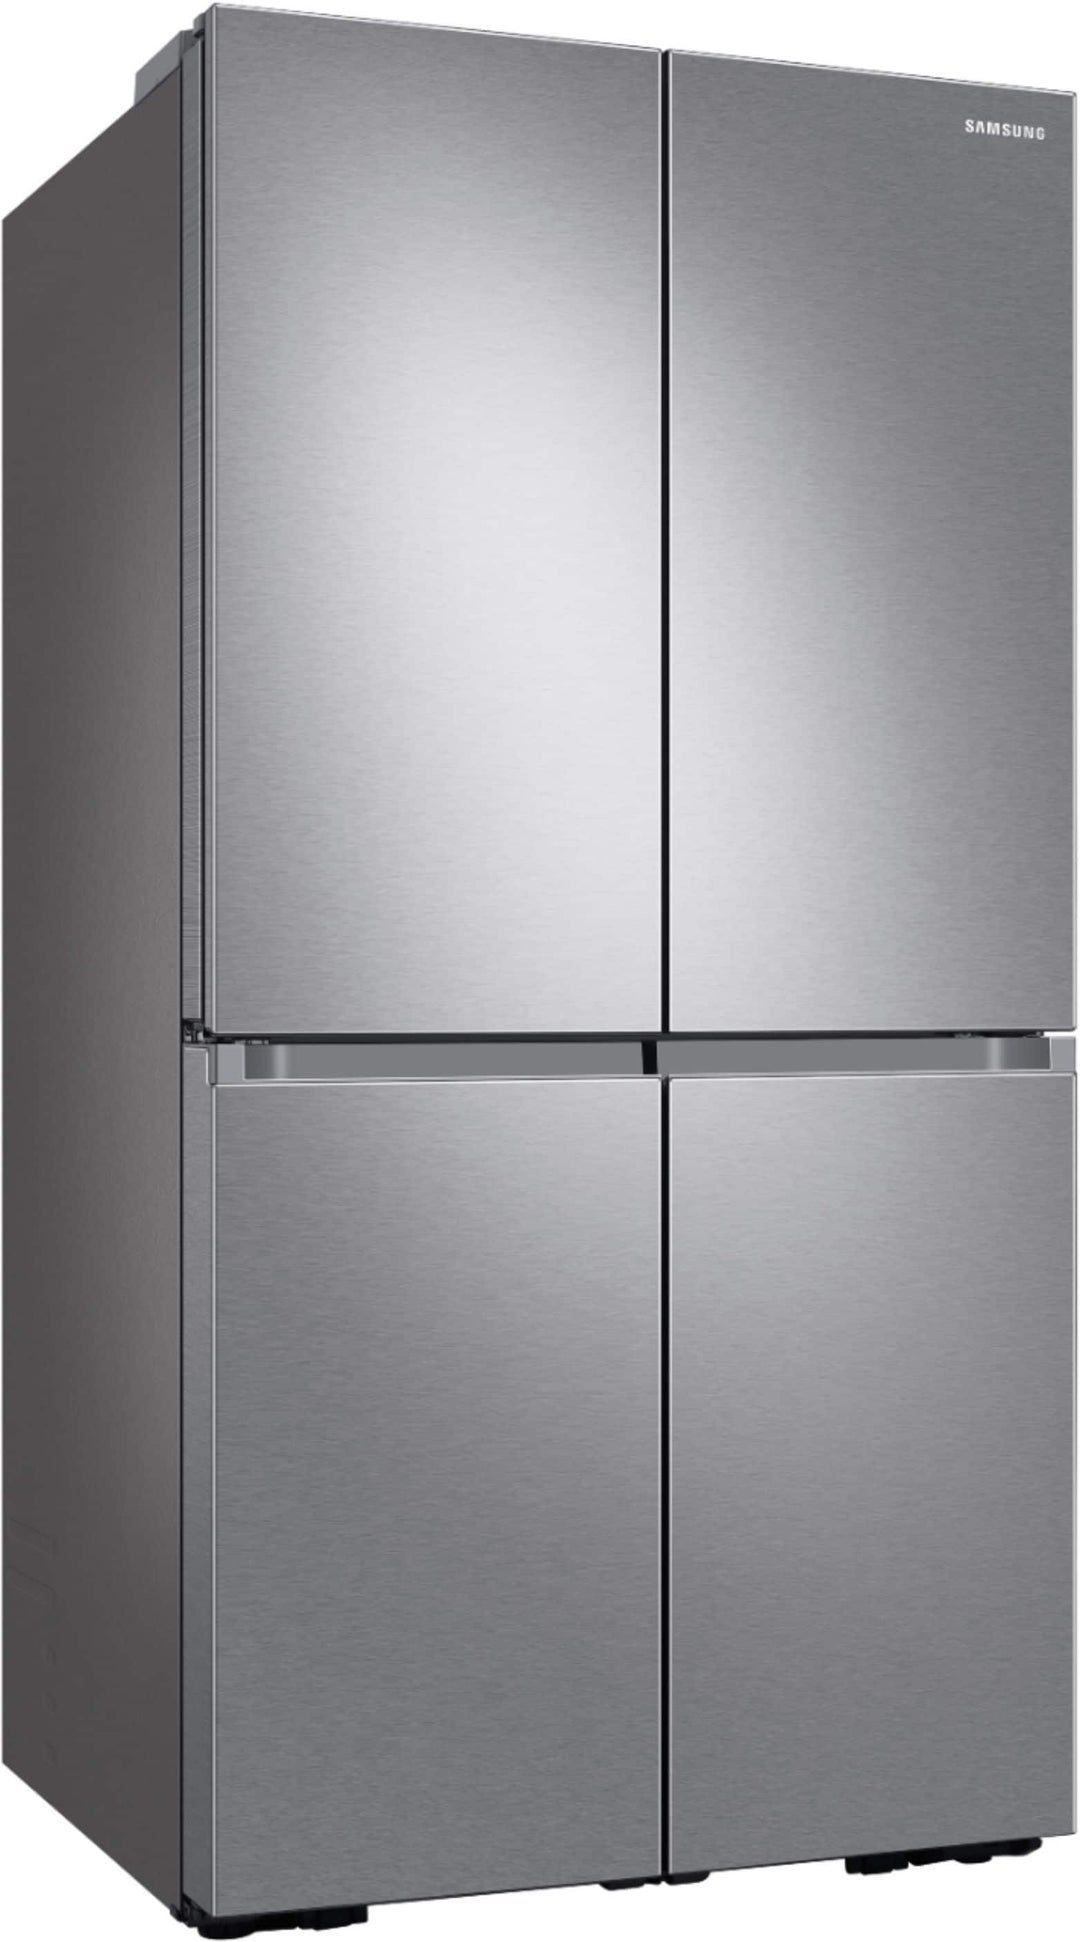 Samsung - 29 cu. ft. 4-Door Flex French Door Refrigerator with WiFi, Beverage Center and Dual Ice Maker - Stainless steel_3